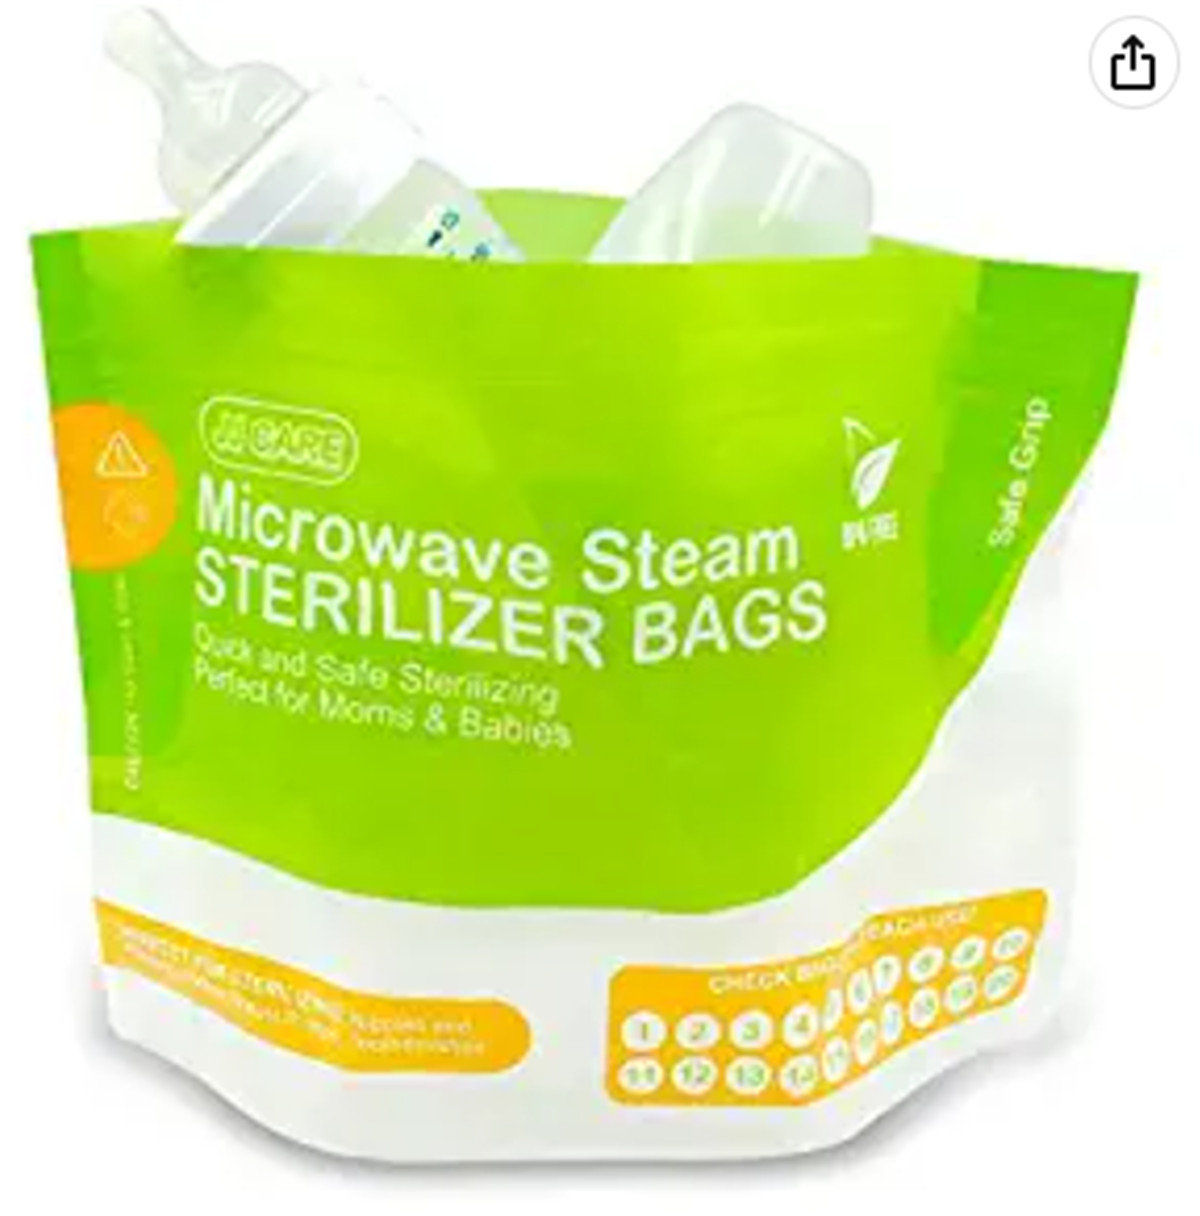 Microwave Bottle Sterilizer Bags Sterilizer Bags for Baby Bottles - 400 ການນໍາໃຊ້ - ຖົງໄອນ້ໍາໄມໂຄເວຟທີ່ໃຊ້ຄືນໃຫມ່ສໍາລັບຂວດເດັກນ້ອຍ - ຖົງຂ້າເຊື້ອແບັກທີເລຍ - ຖົງຂ້າເຊື້ອໄມໂຄເວຟ (6)